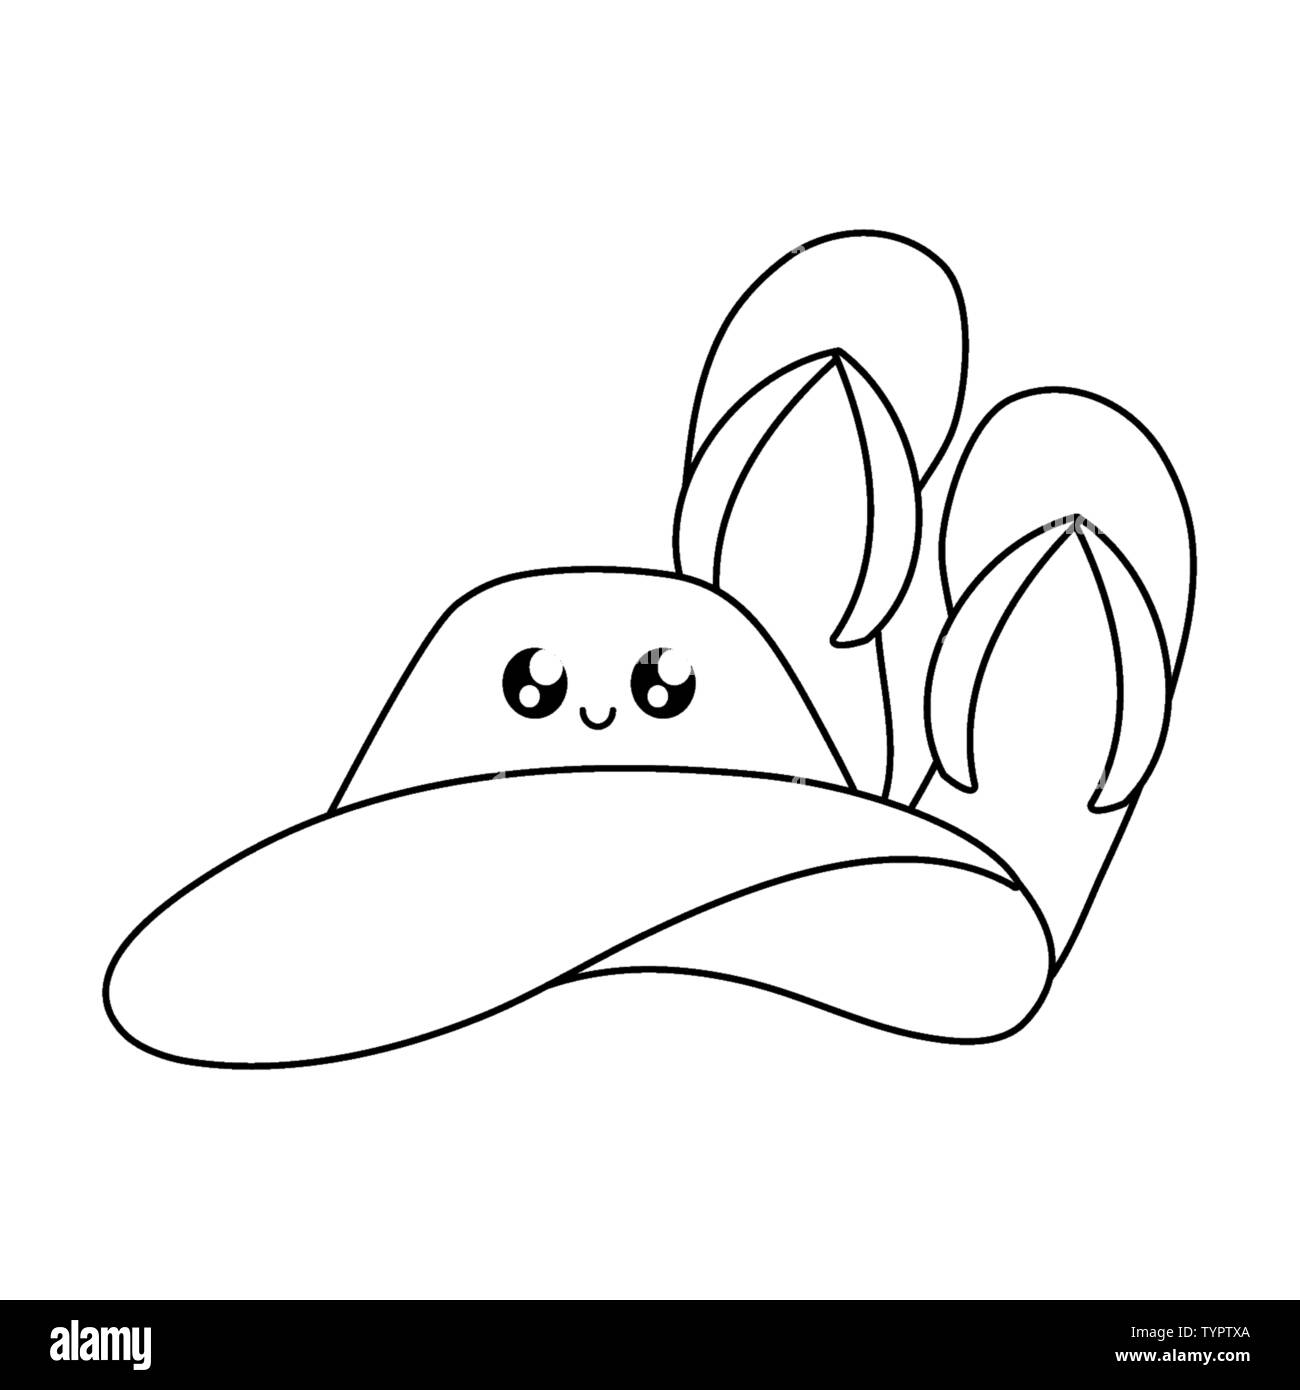 Tongs avec chapeau femme kawaii vector illustration design Image  Vectorielle Stock - Alamy